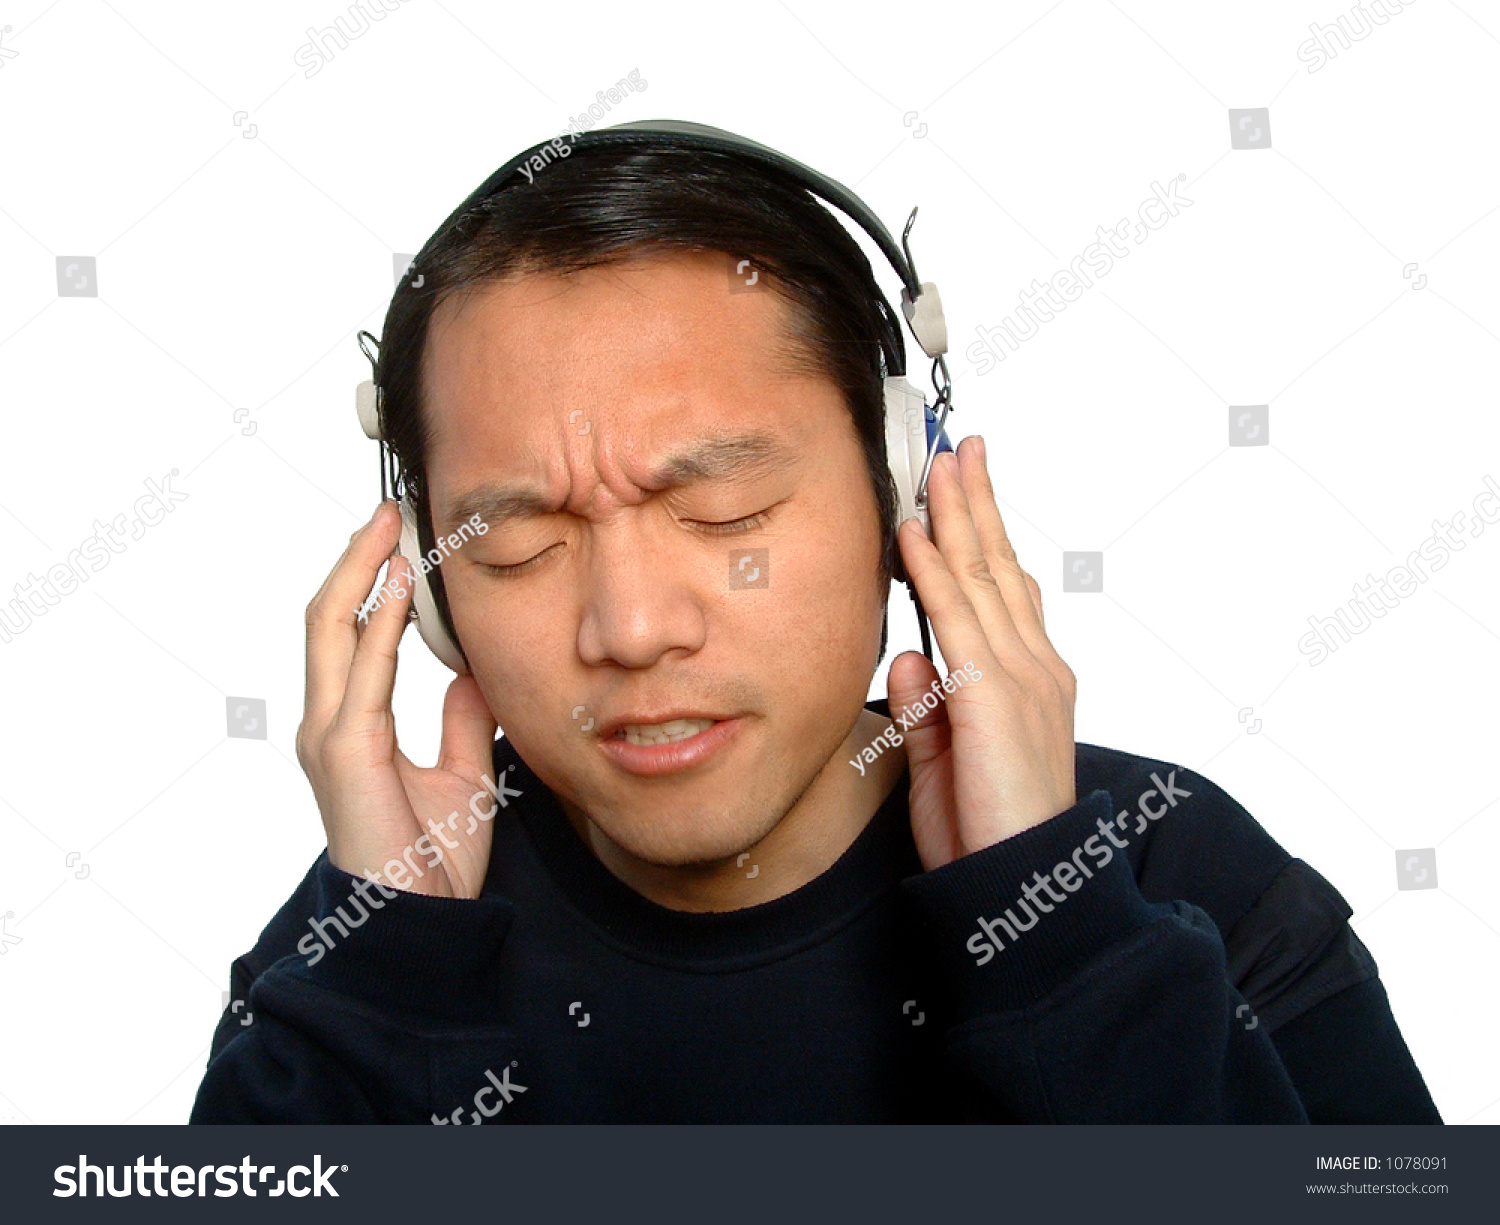 stock-photo-one-chinese-man-enjoying-listening-to-music-through-his-headphones-isloated-1078091.jpg